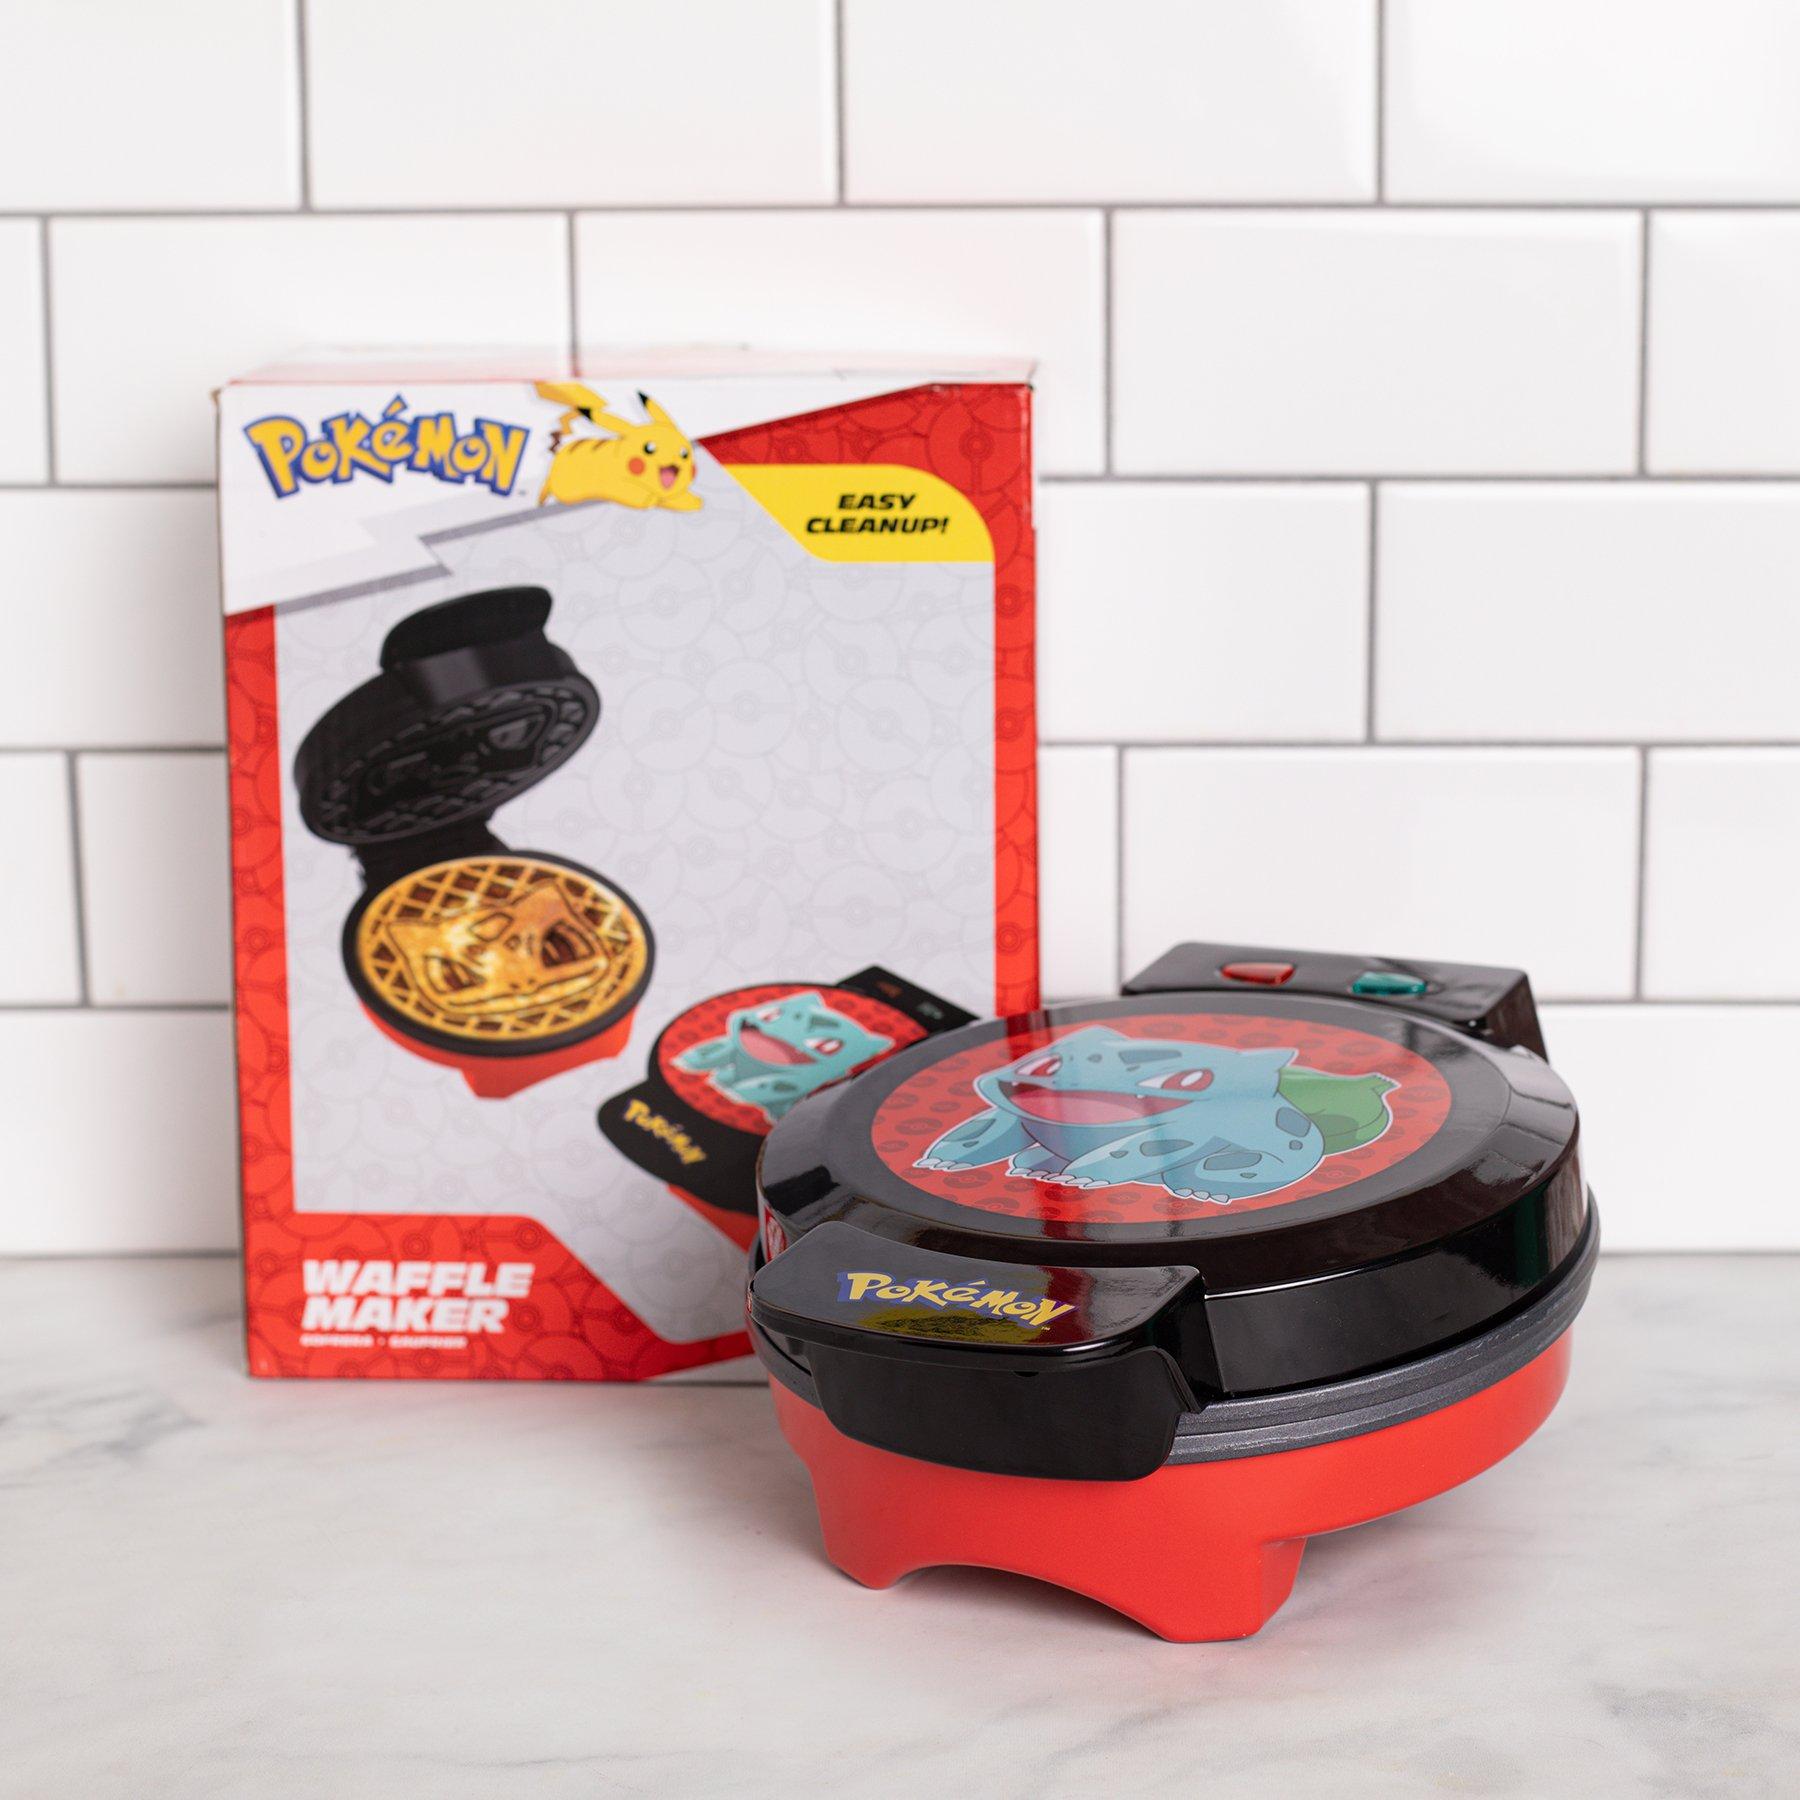 https://media.gamestop.com/i/gamestop/20005609_ALT06/Pokemon-Bulbasaur-Round-Waffle-Maker?$pdp$